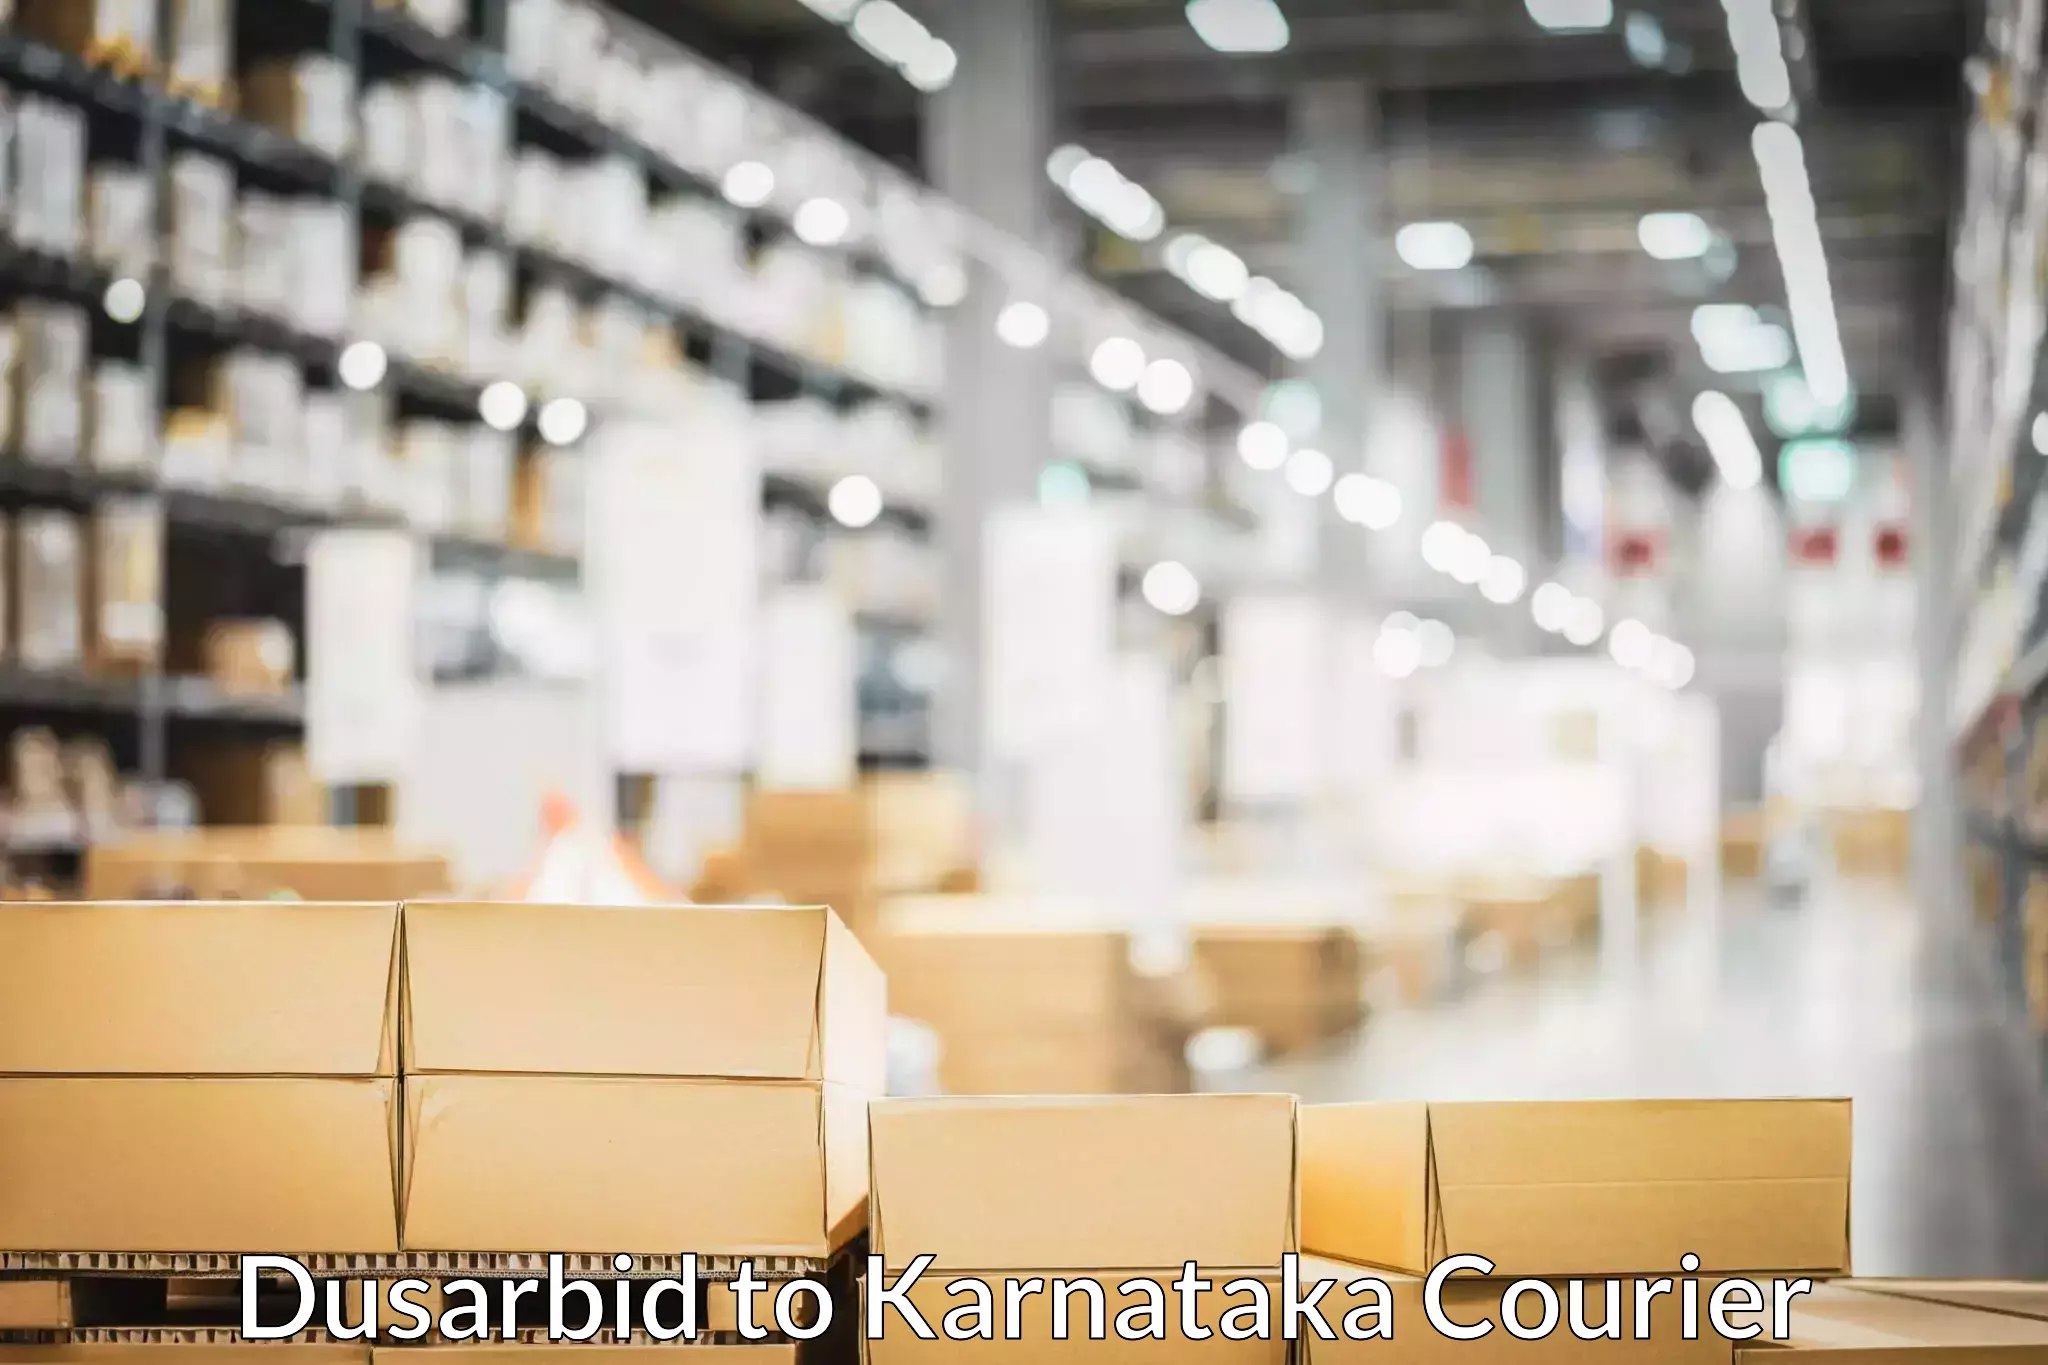 Efficient moving company Dusarbid to Karnataka